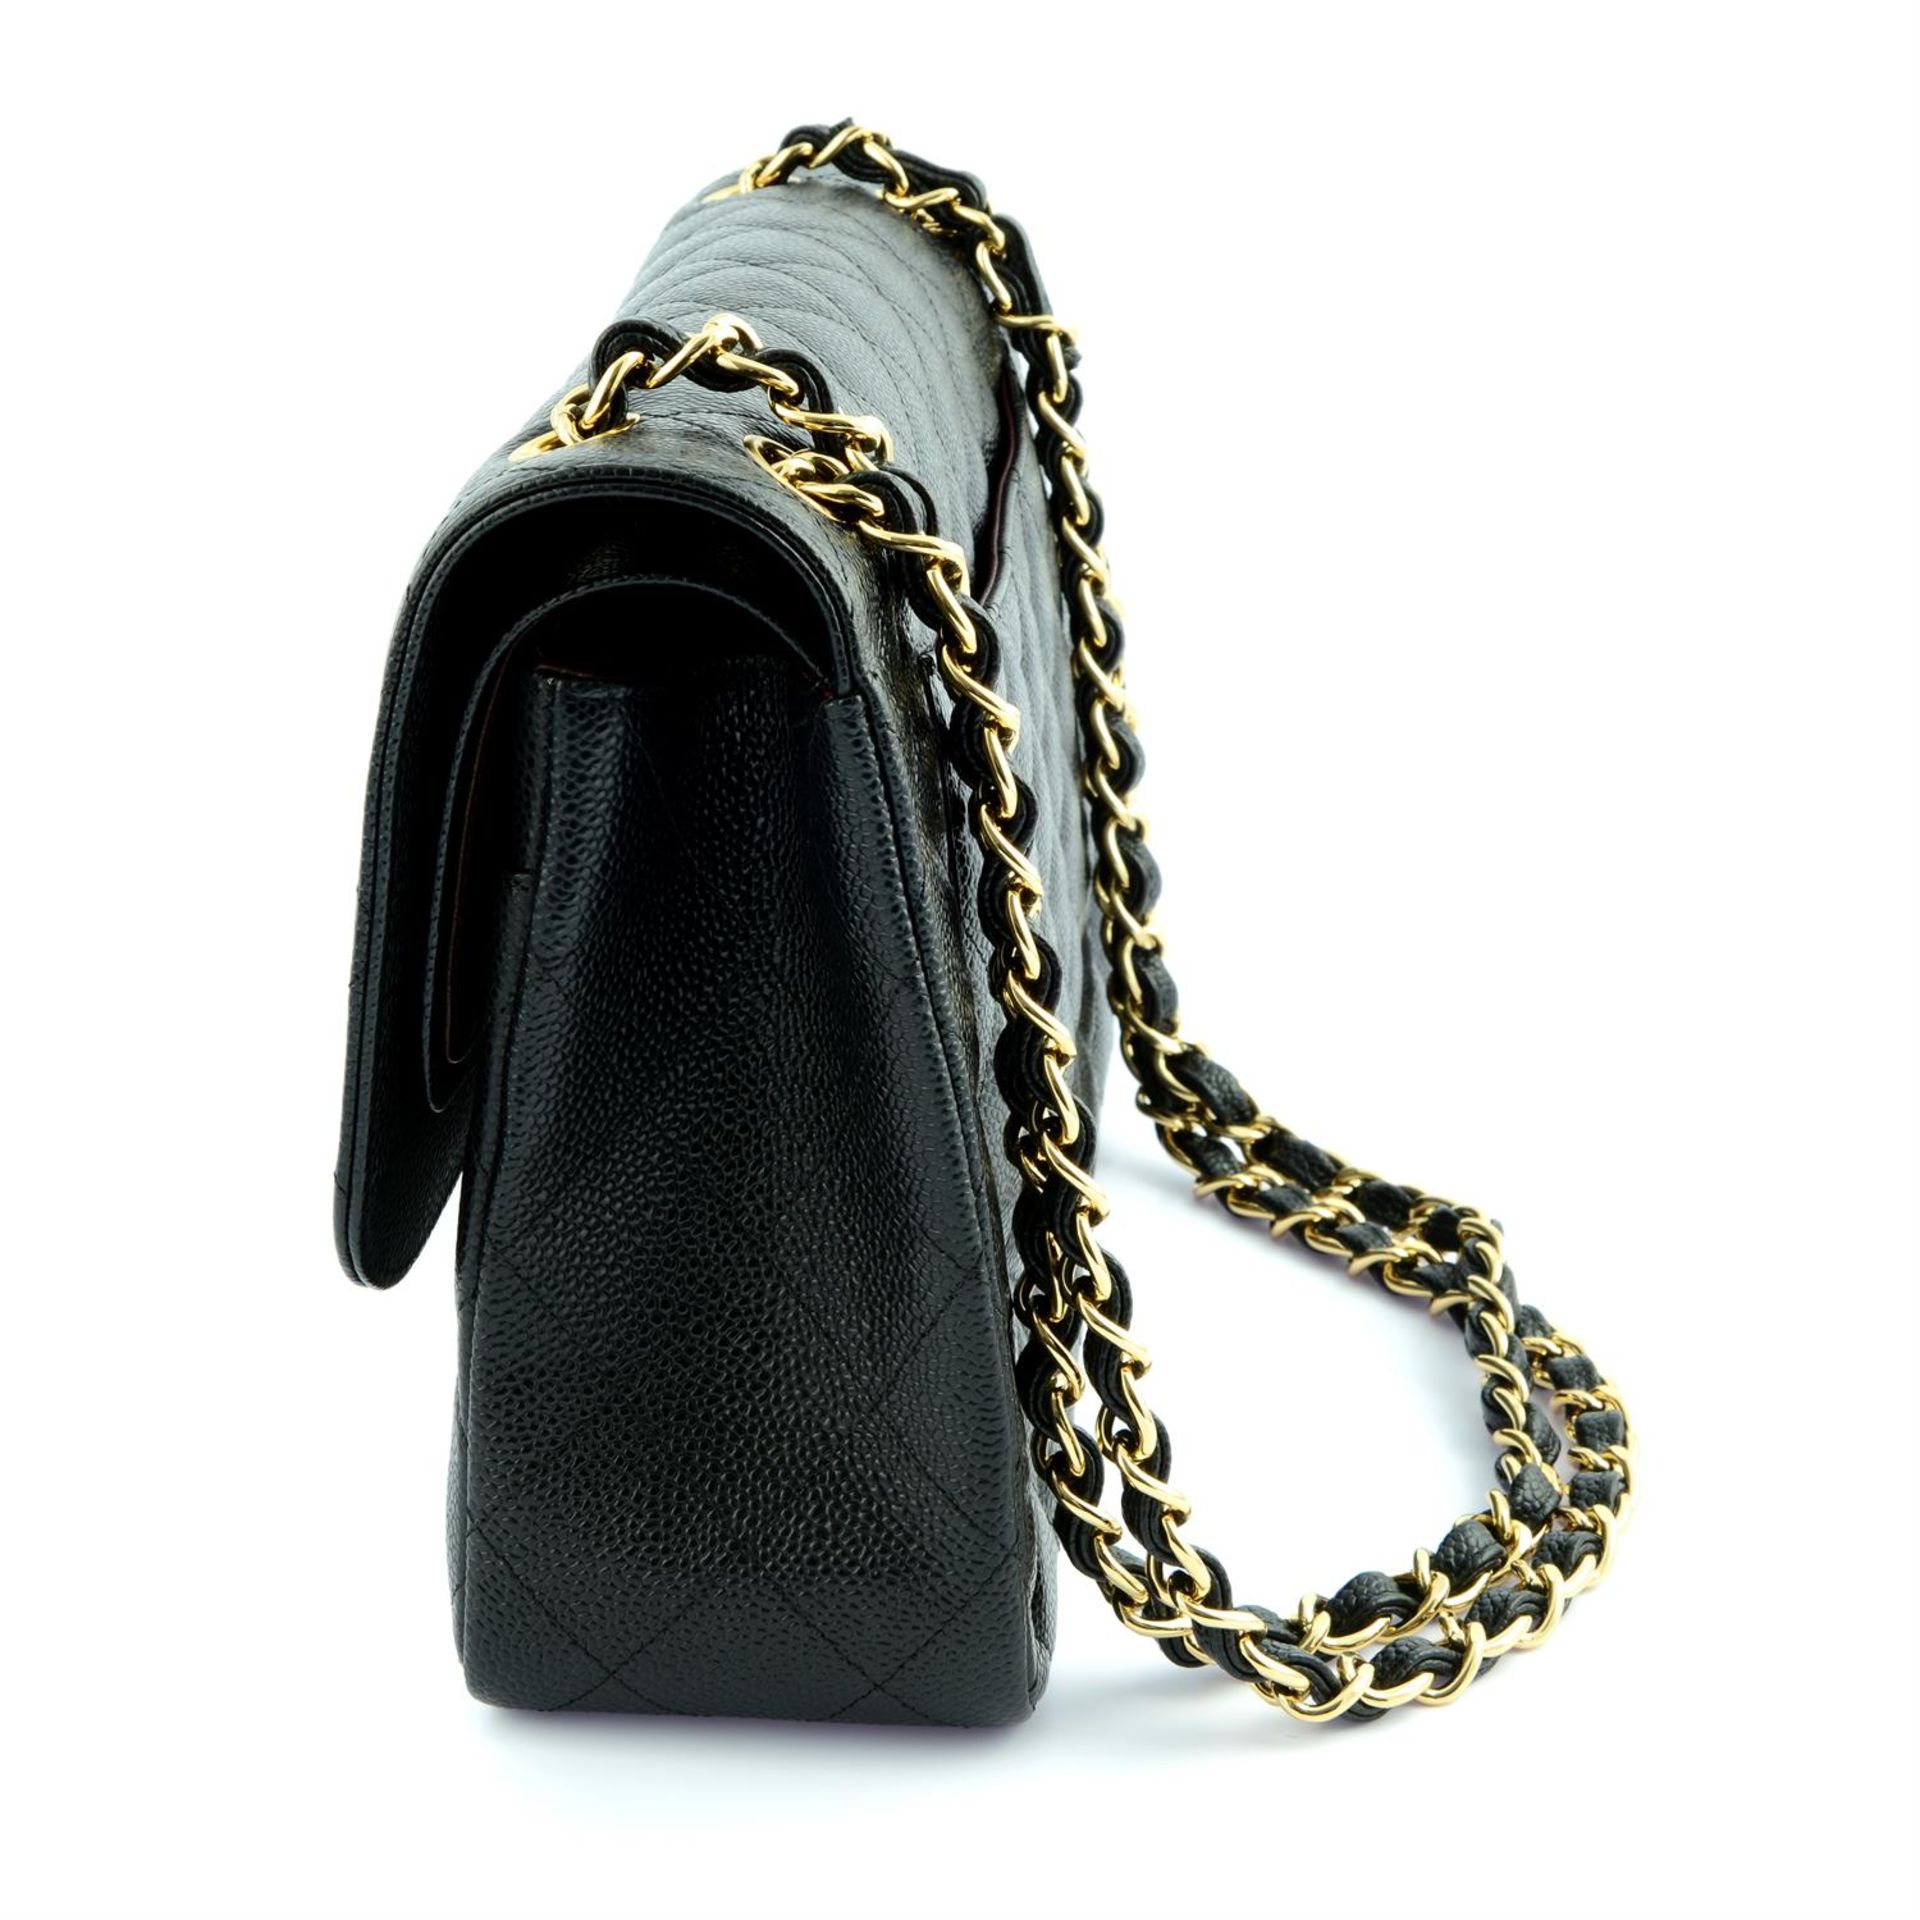 CHANEL - a black Caviar leather Jumbo Classic double flap handbag. - Image 3 of 6